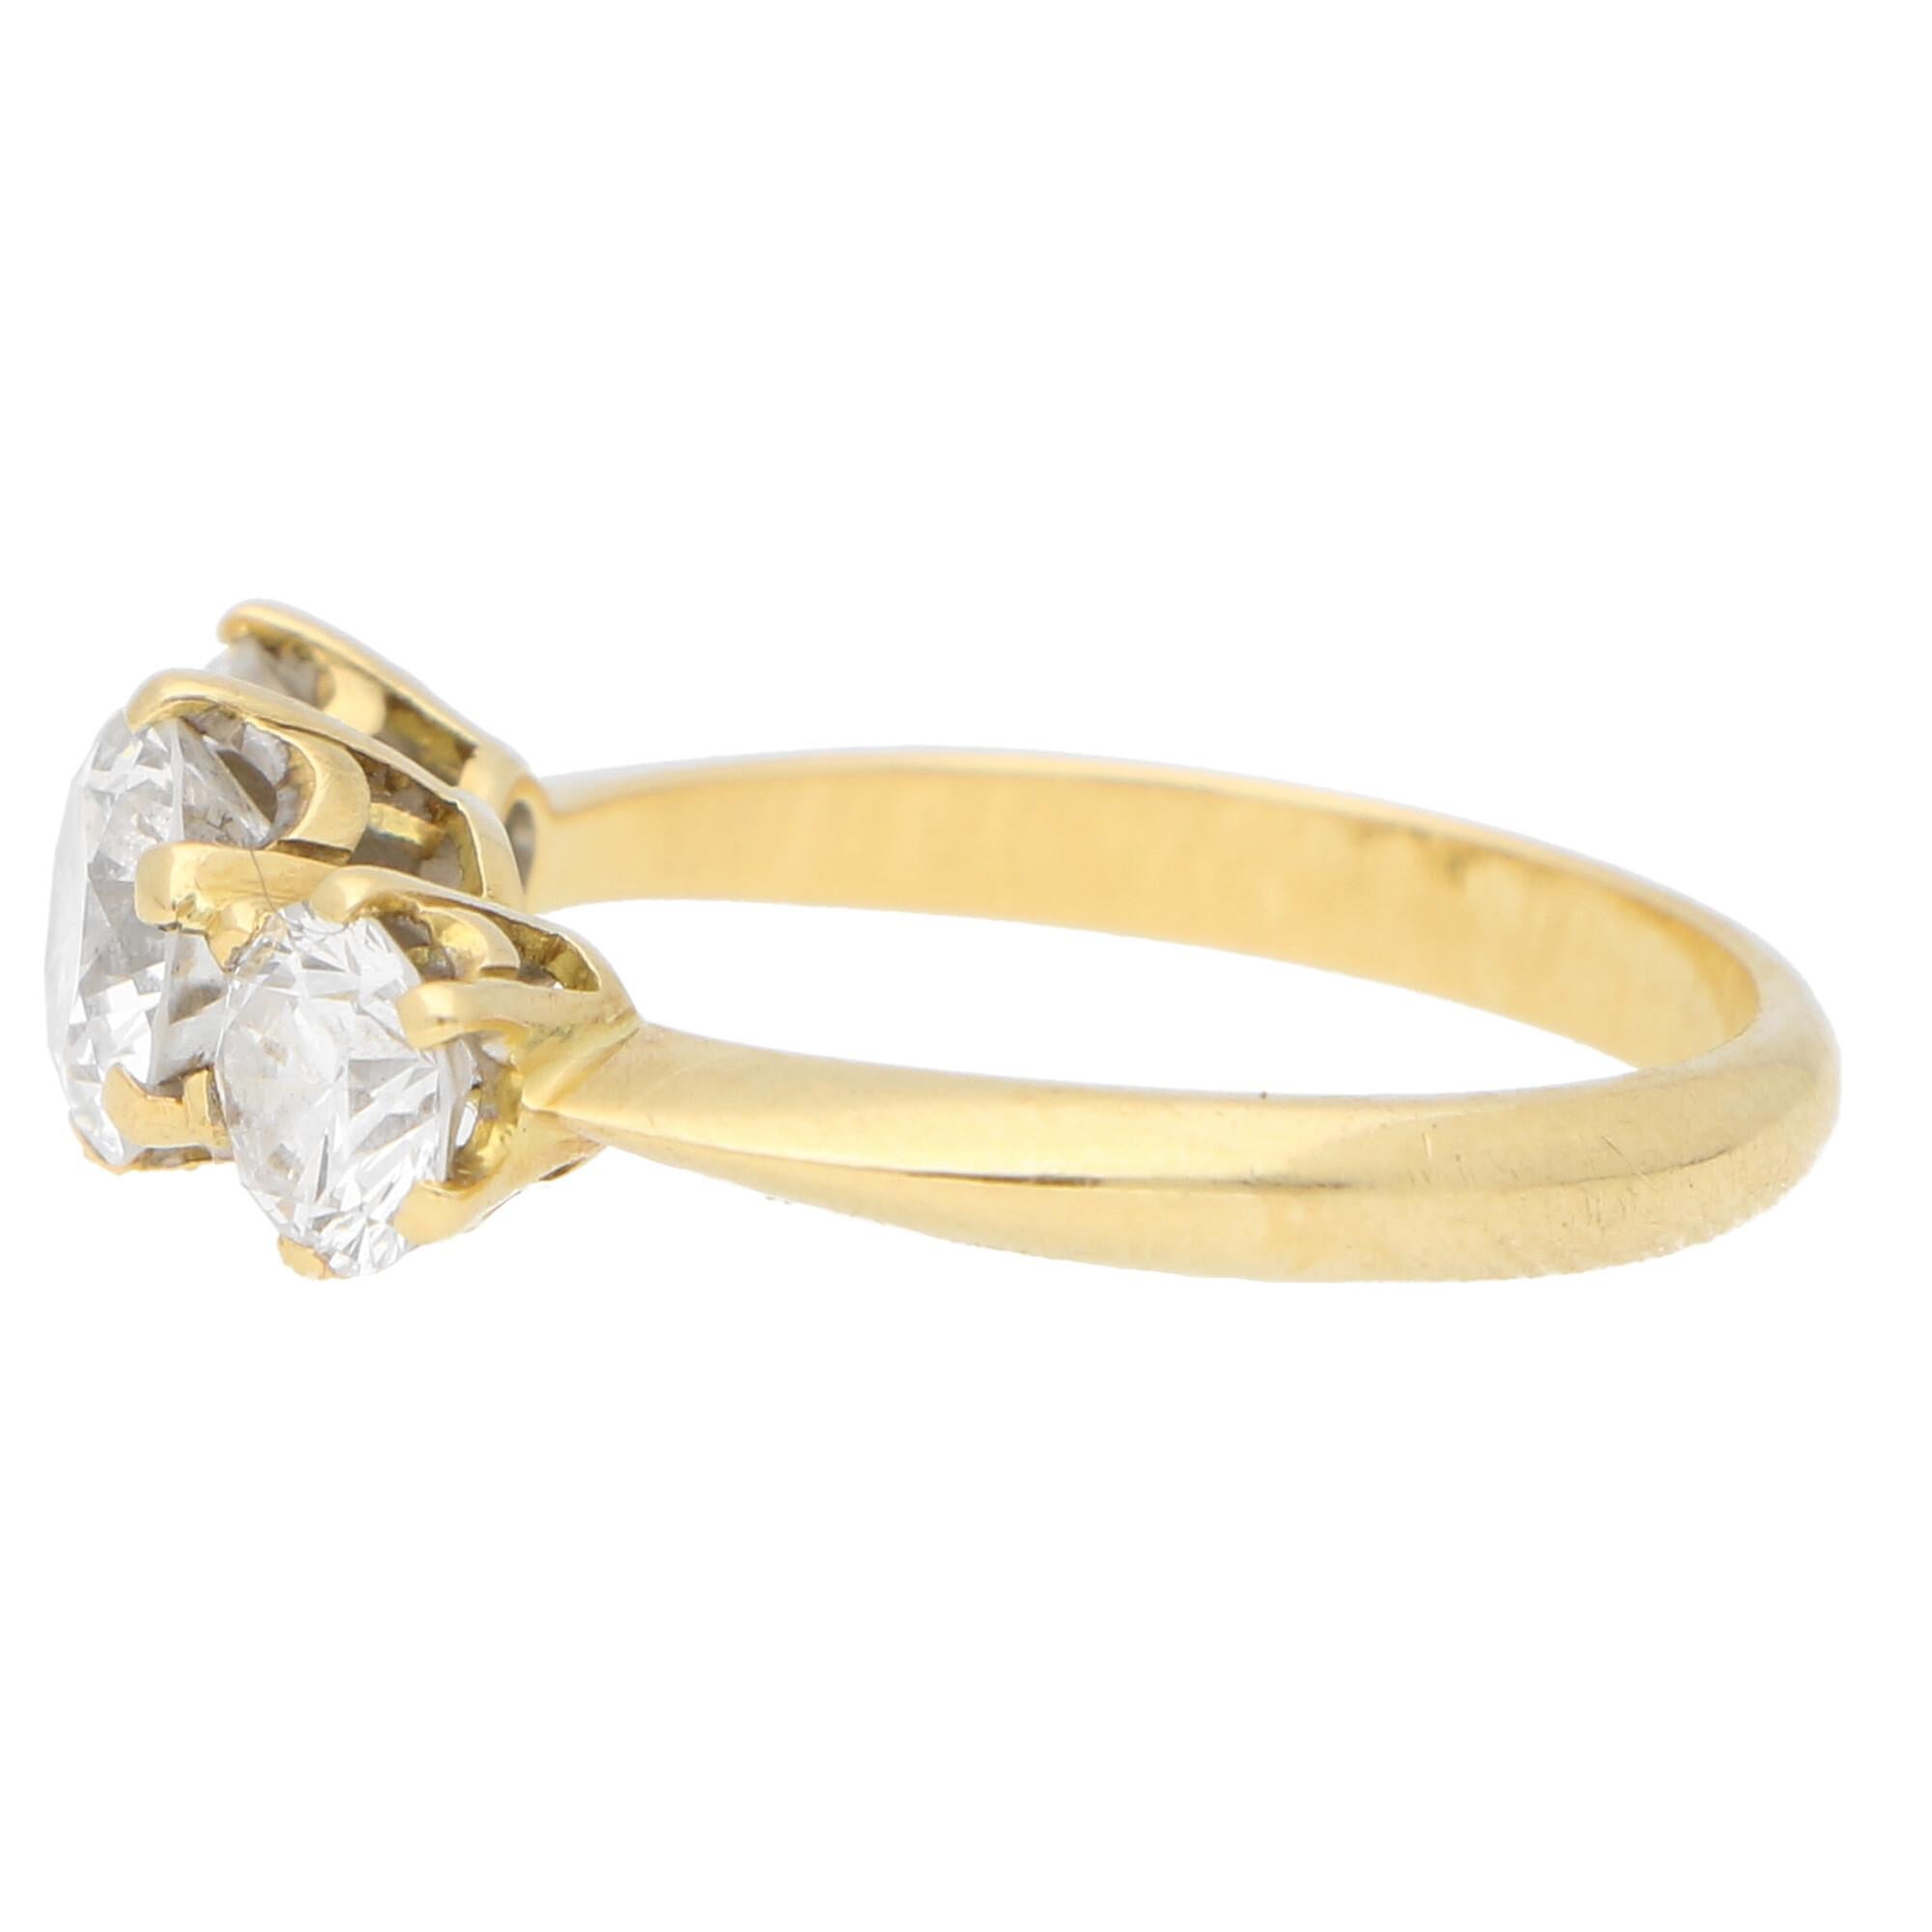 Women's or Men's Vintage Round Cut Diamond Three Stone Engagement Ring Set in 18k Yellow Gold